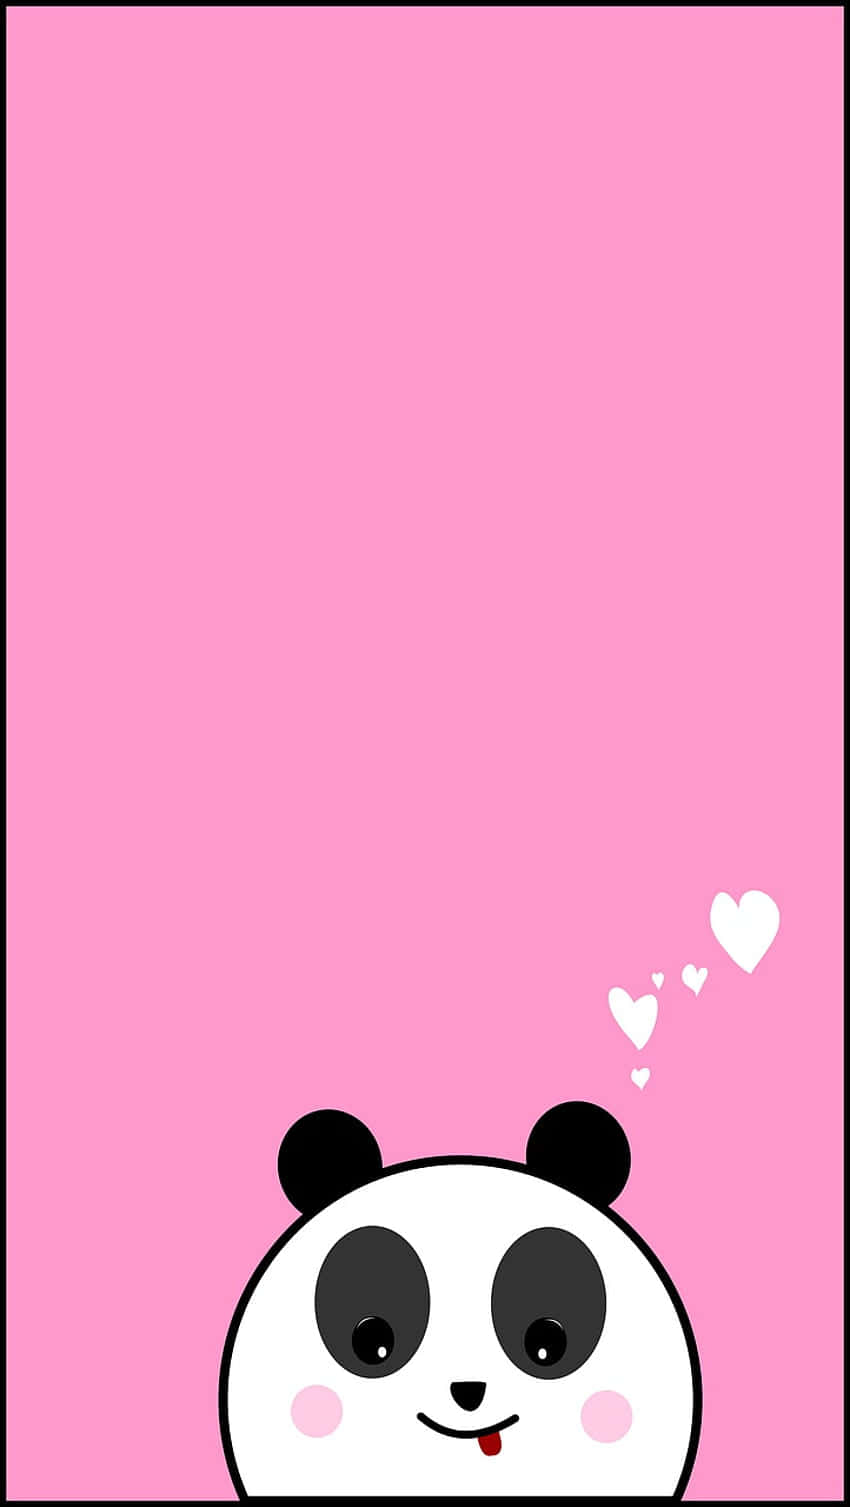 Girly Cute Panda Pink Heart Wallpaper